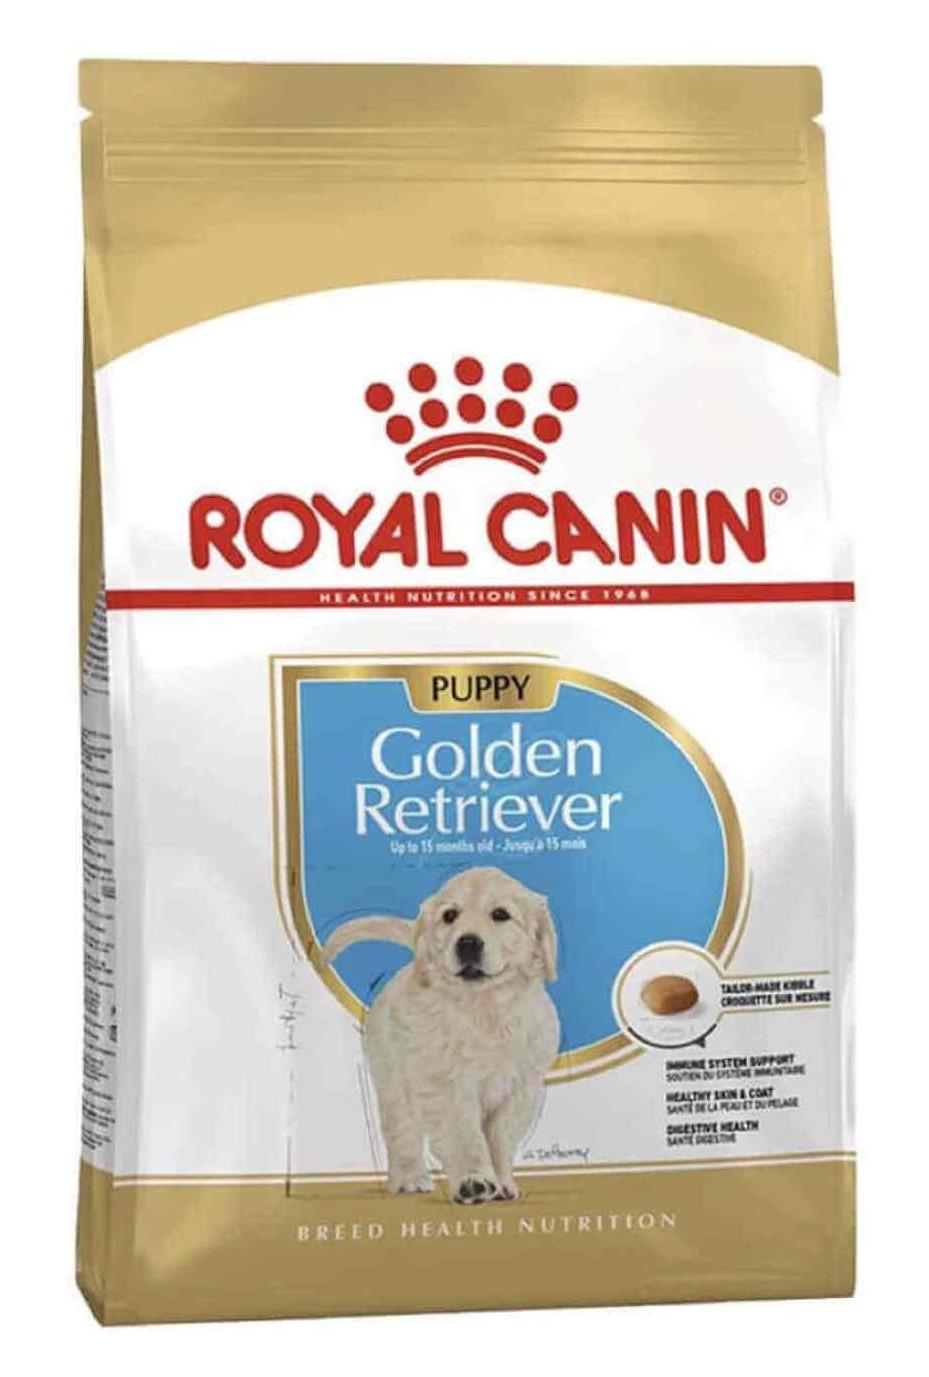 Royal Canin Golden Retriever Junior